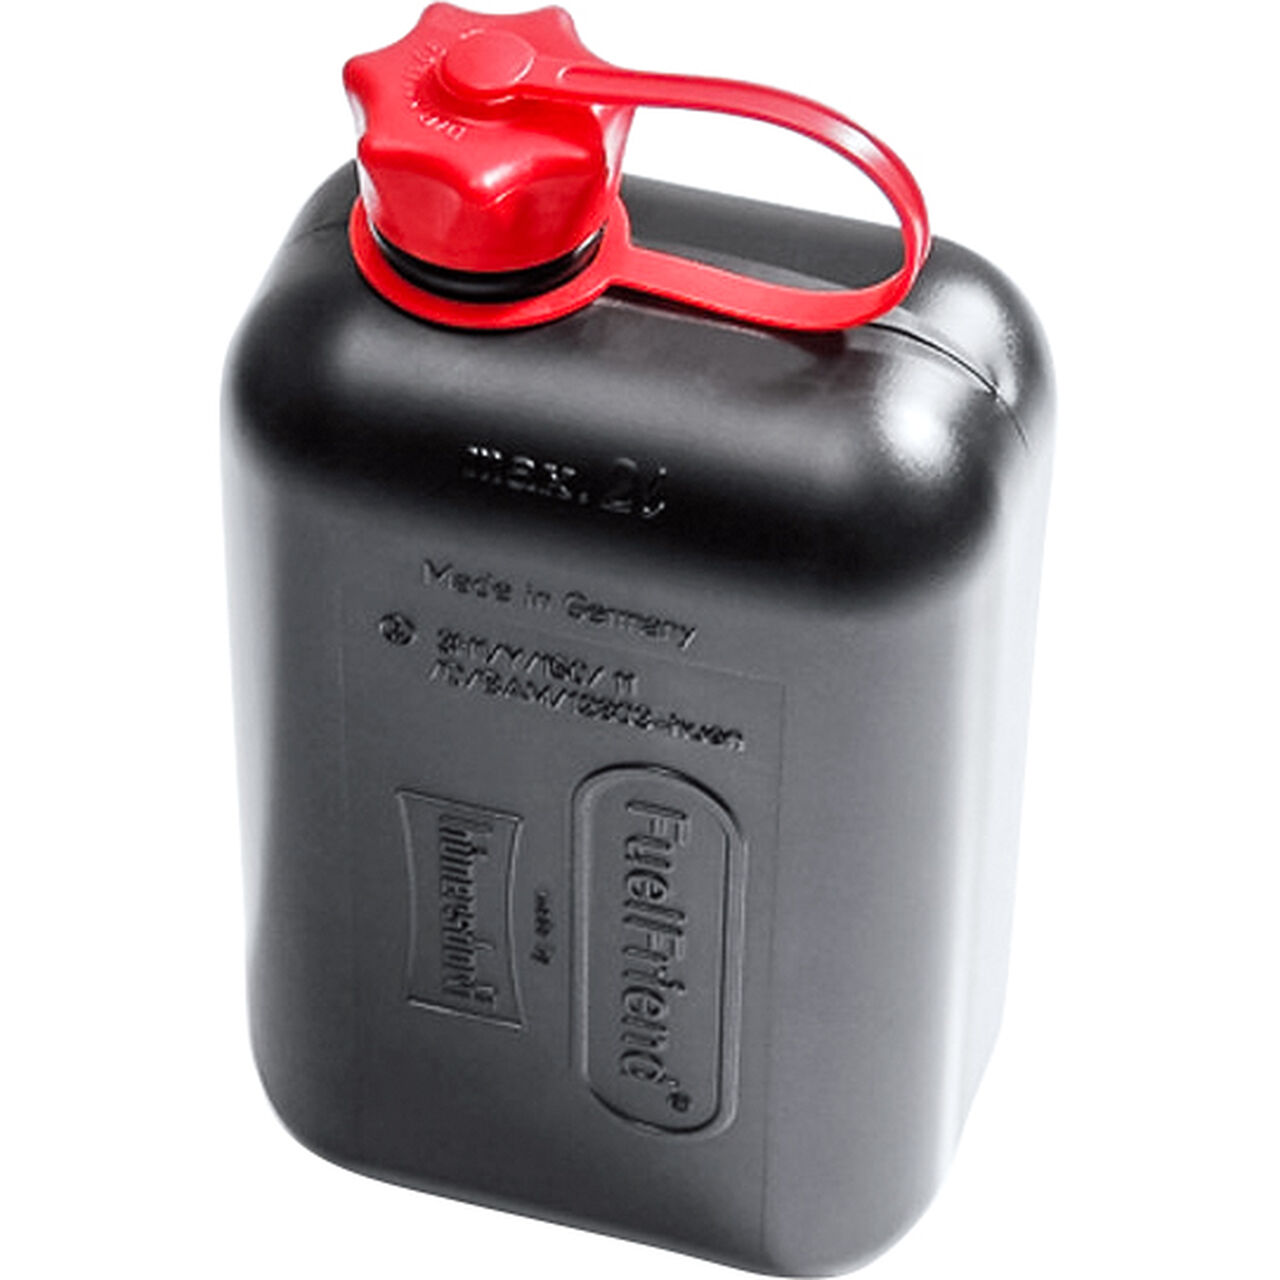 Kanister-Kit für TraX mit Kanister (2 Liter)